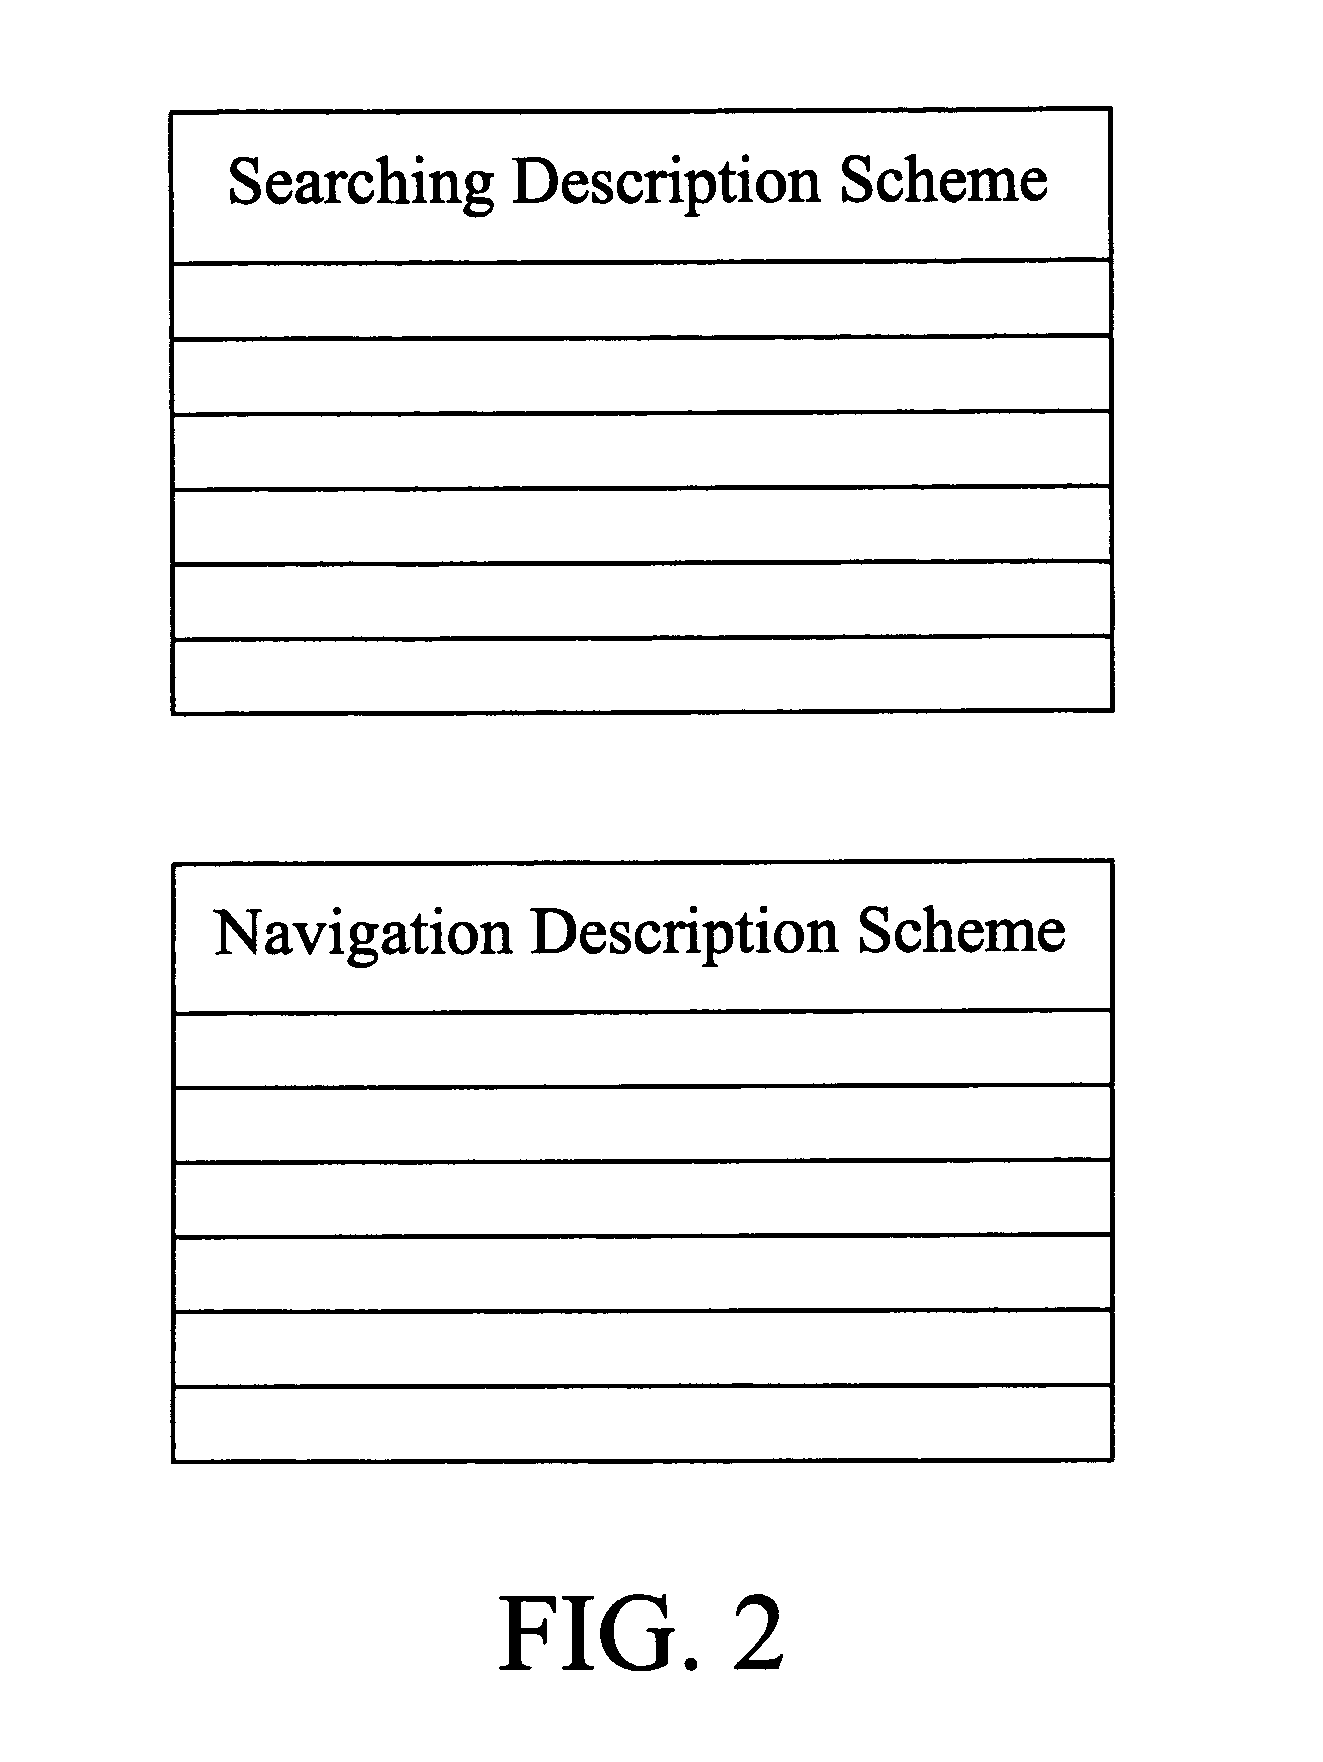 Segmentation description scheme for audio-visual content